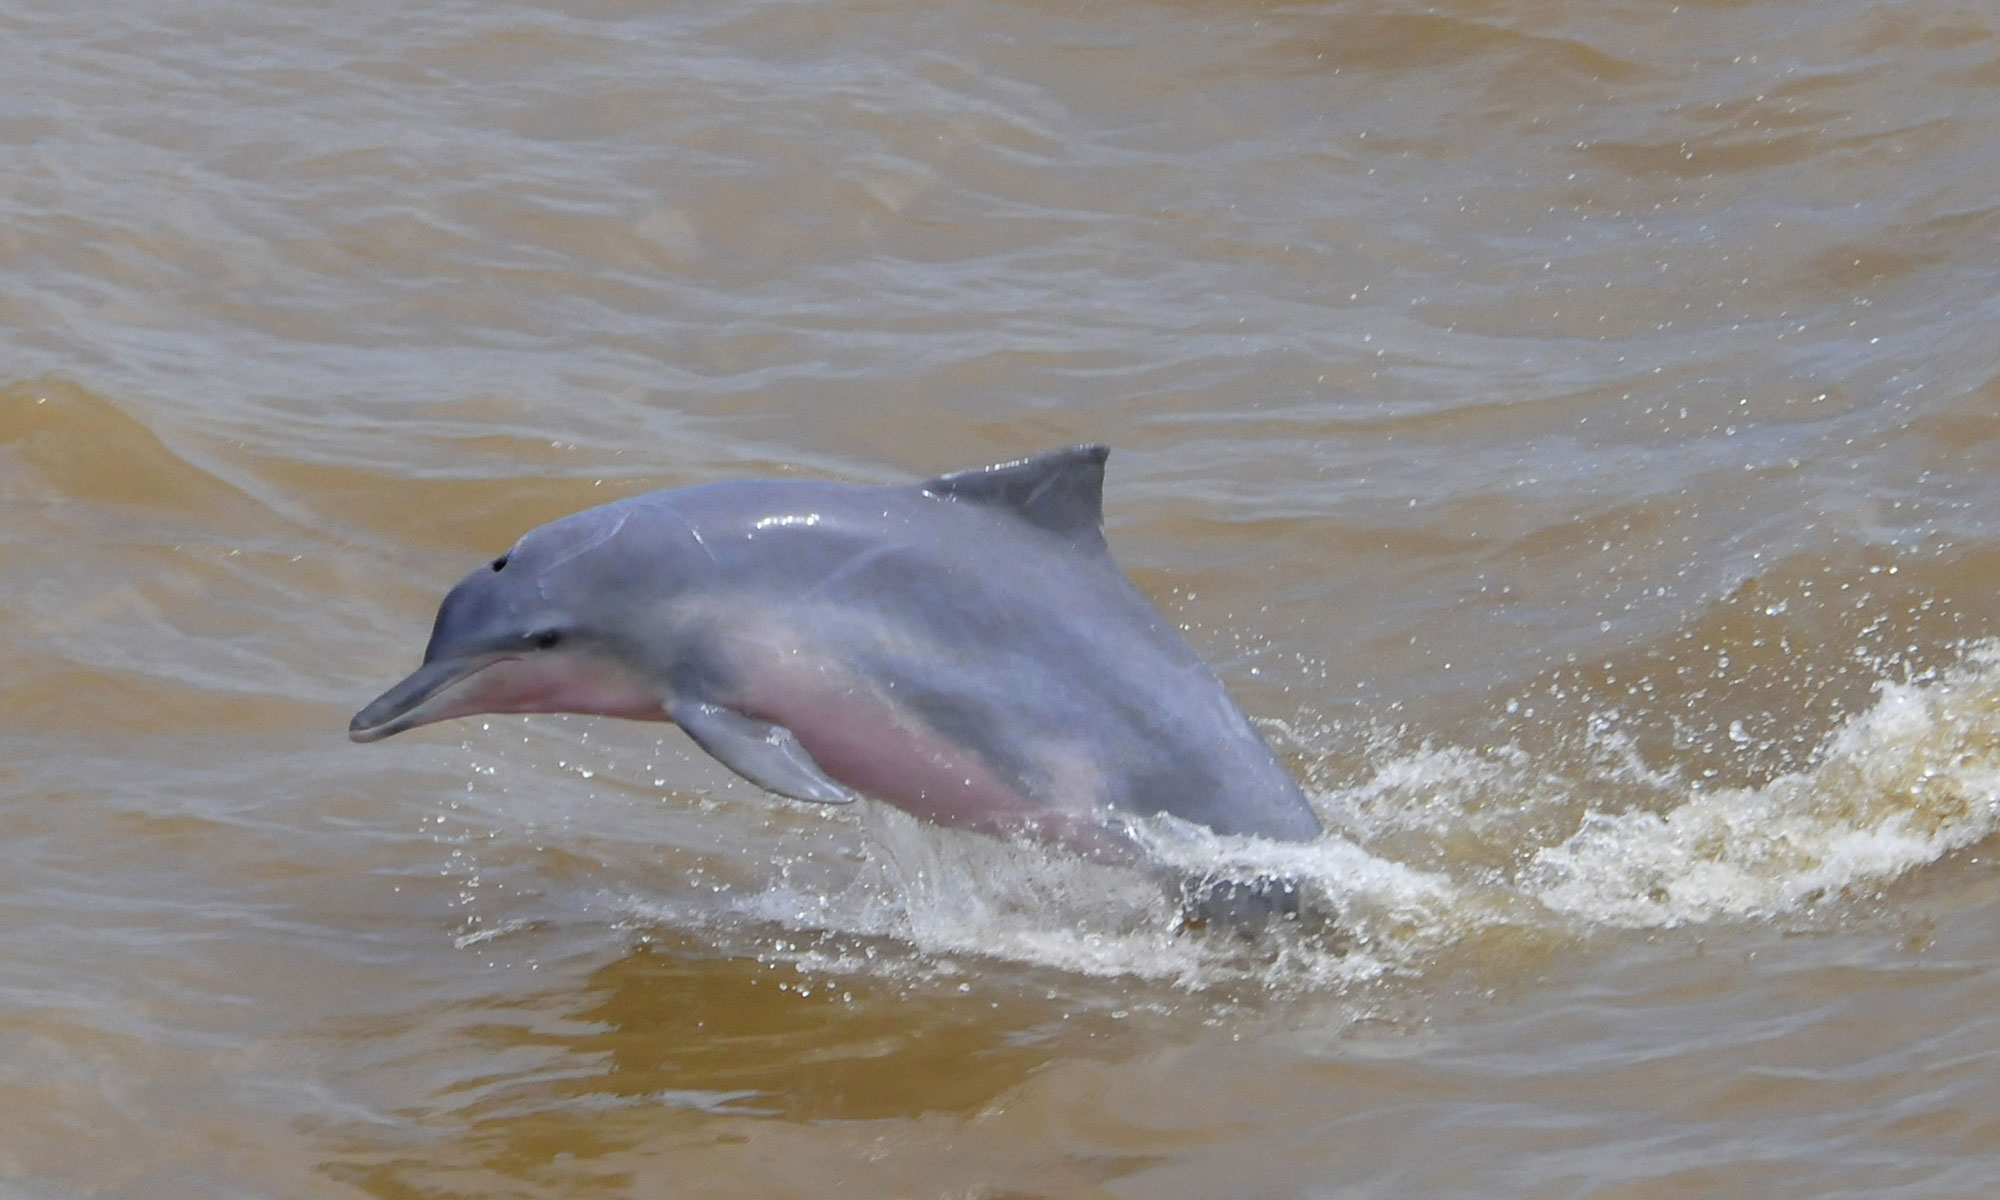 sotalia delfin dolphin guianensis delfines dolphins